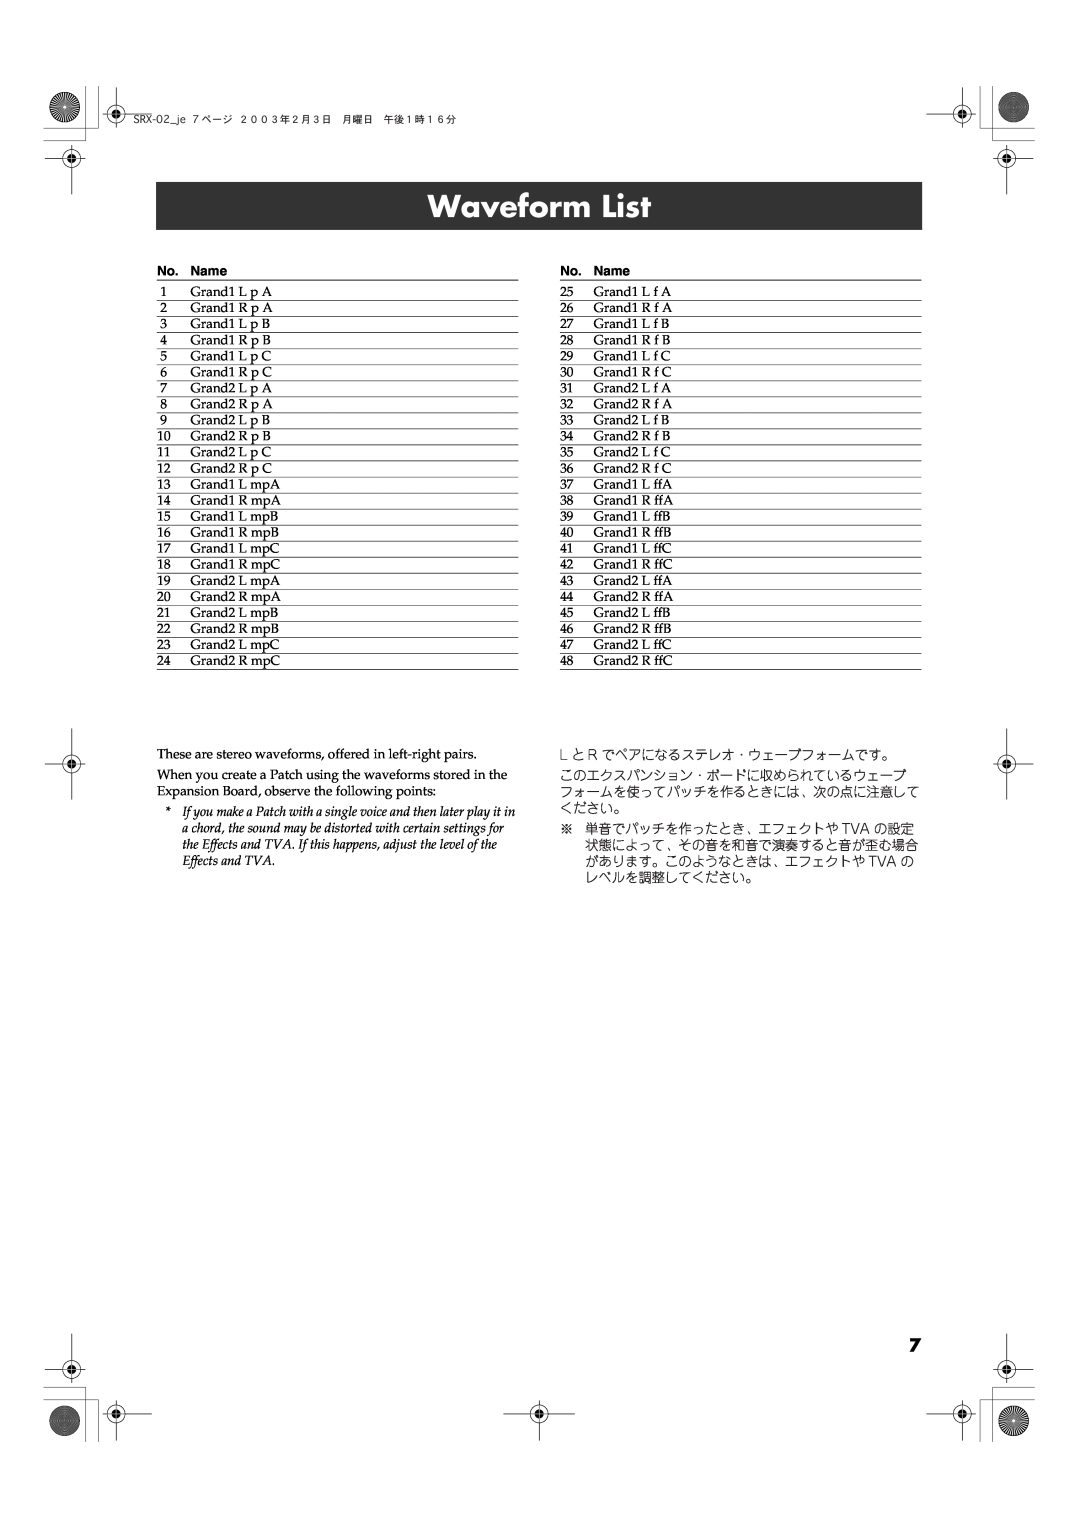 Roland SRX-02 manual Waveform List, No. Name 